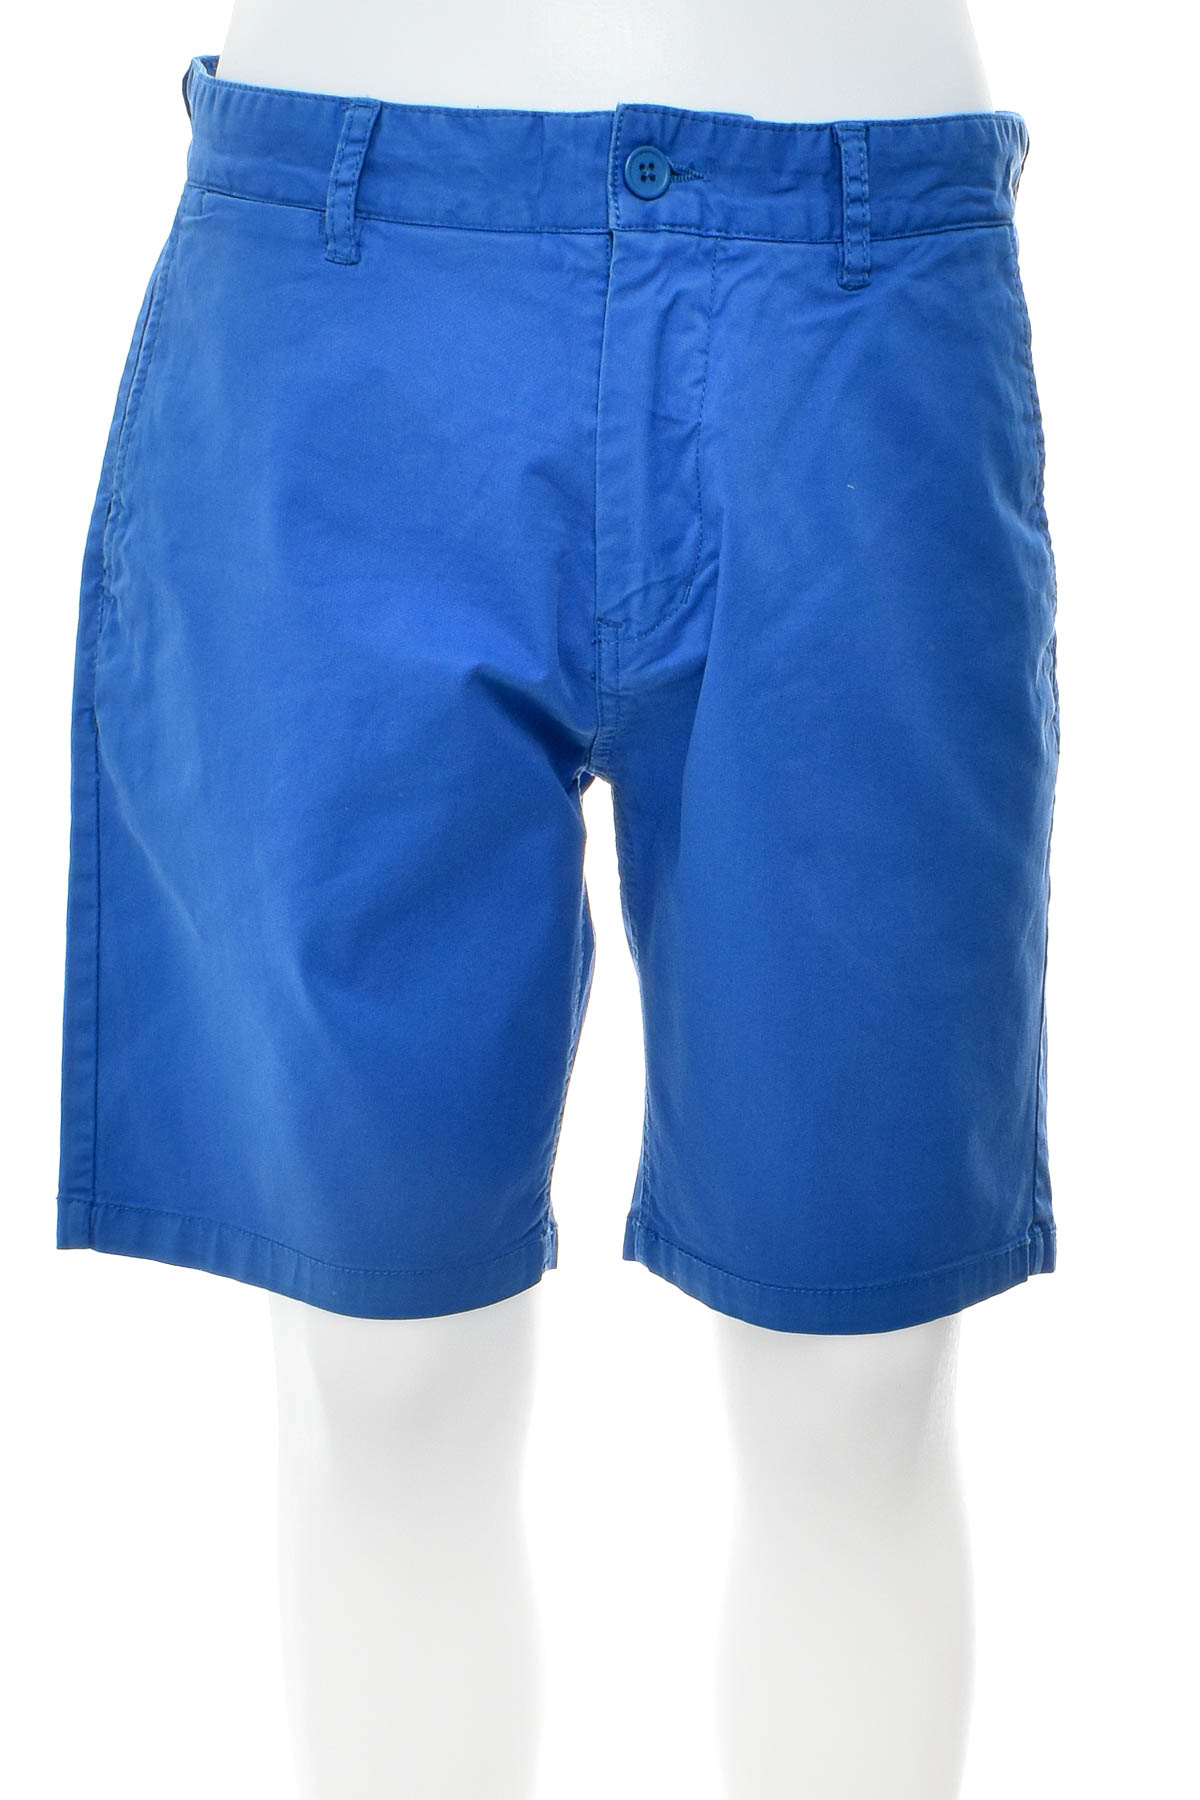 Men's shorts - Minimum - 0